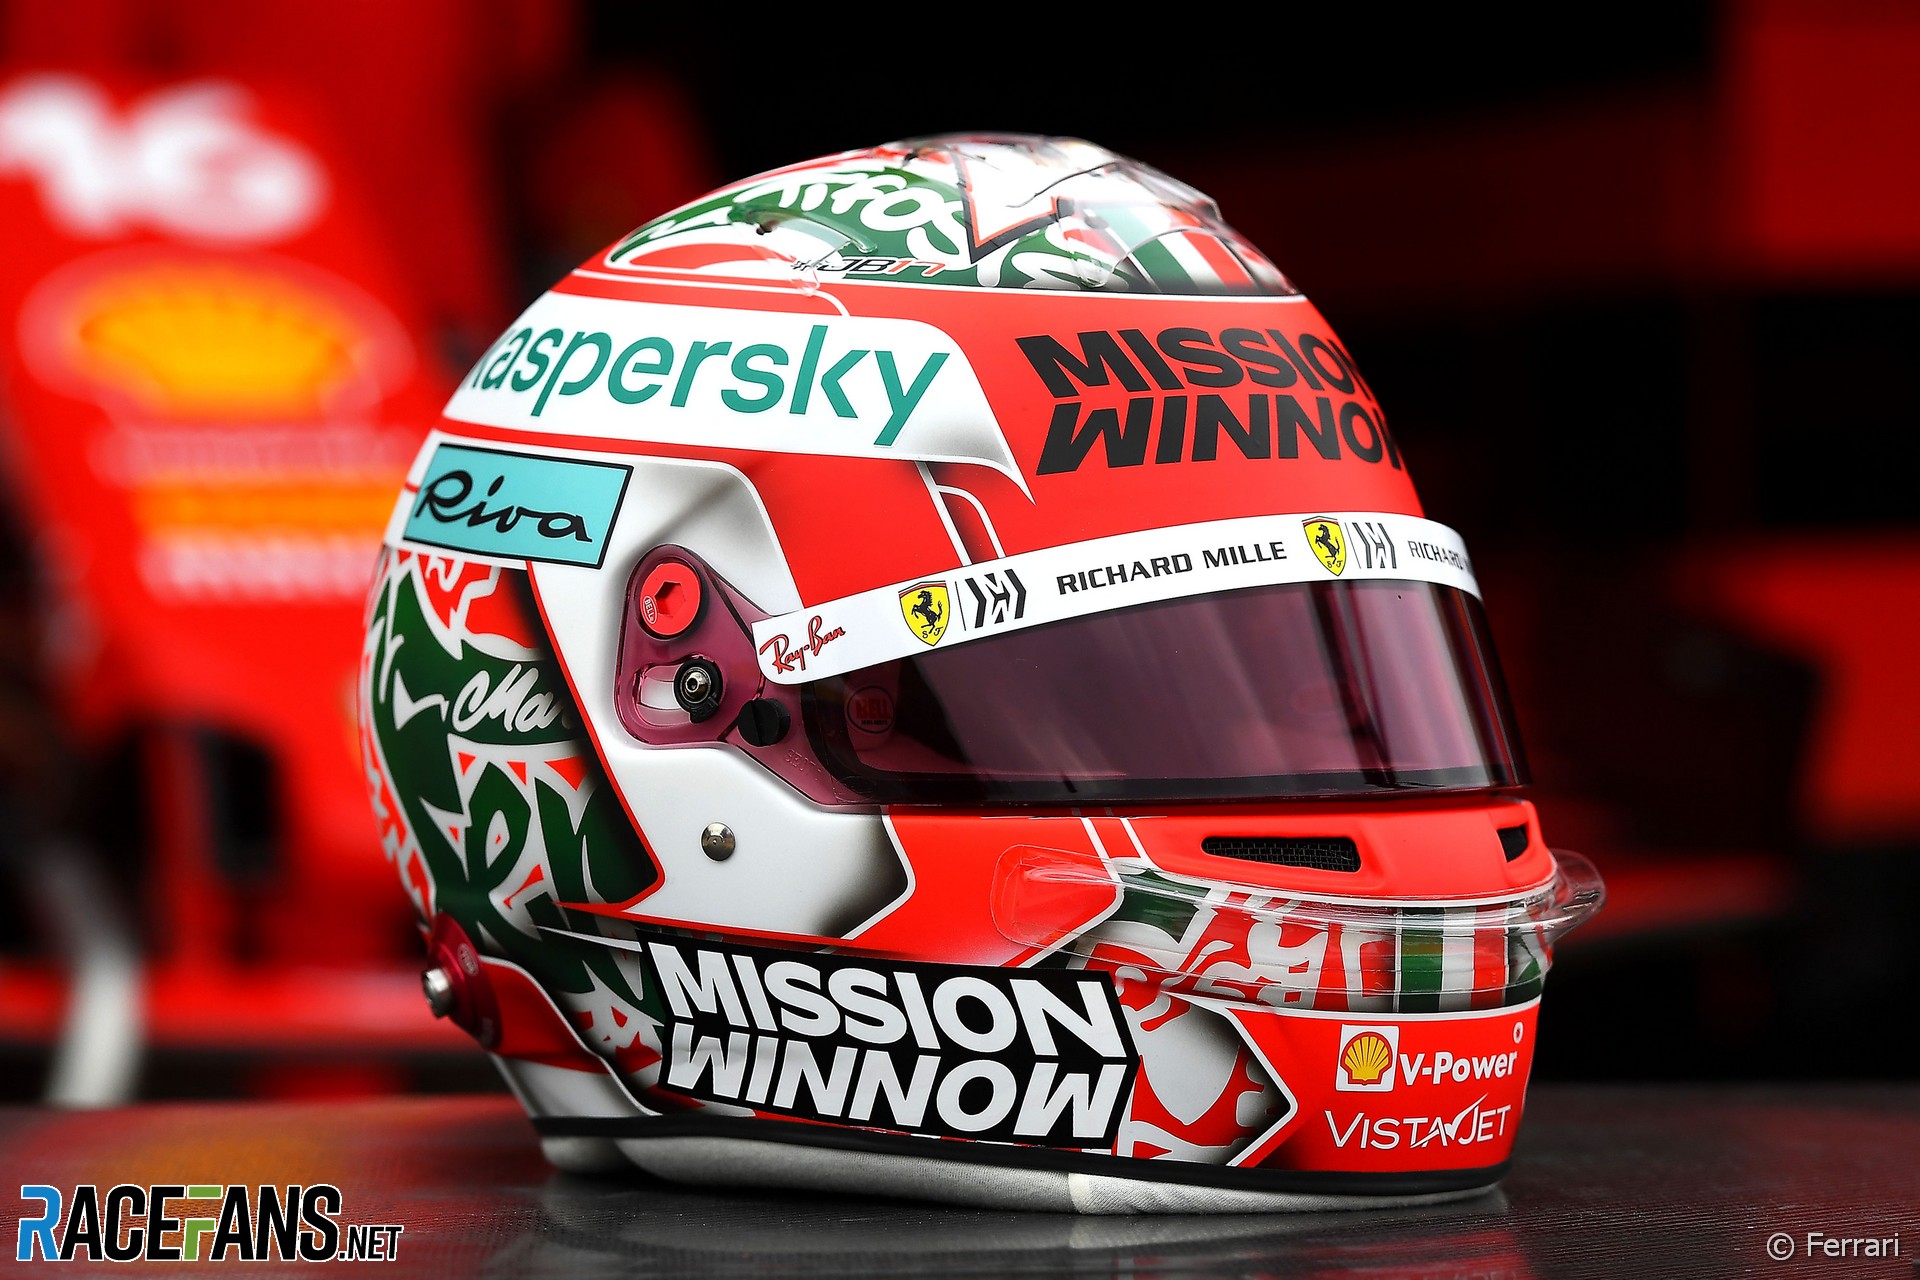 Charles Leclerc's 2021 Emilia-Romagna Grand Prix helmet